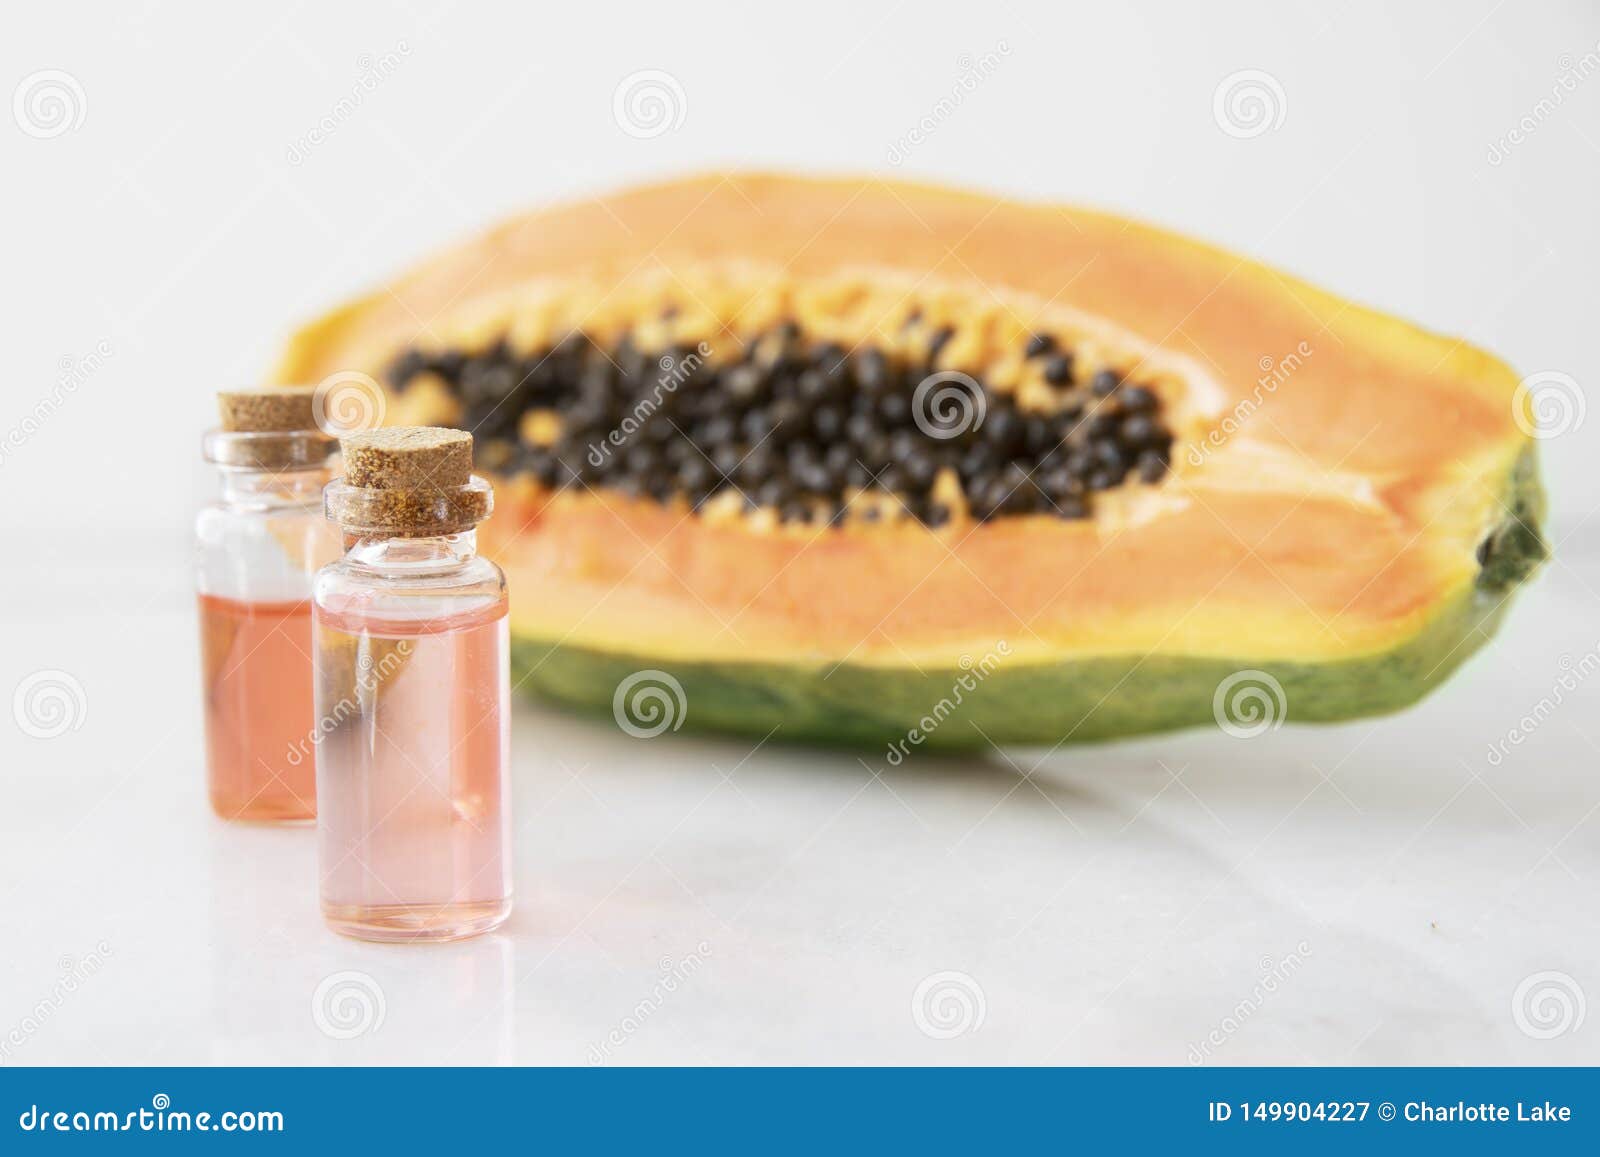 papaya extract with fruit